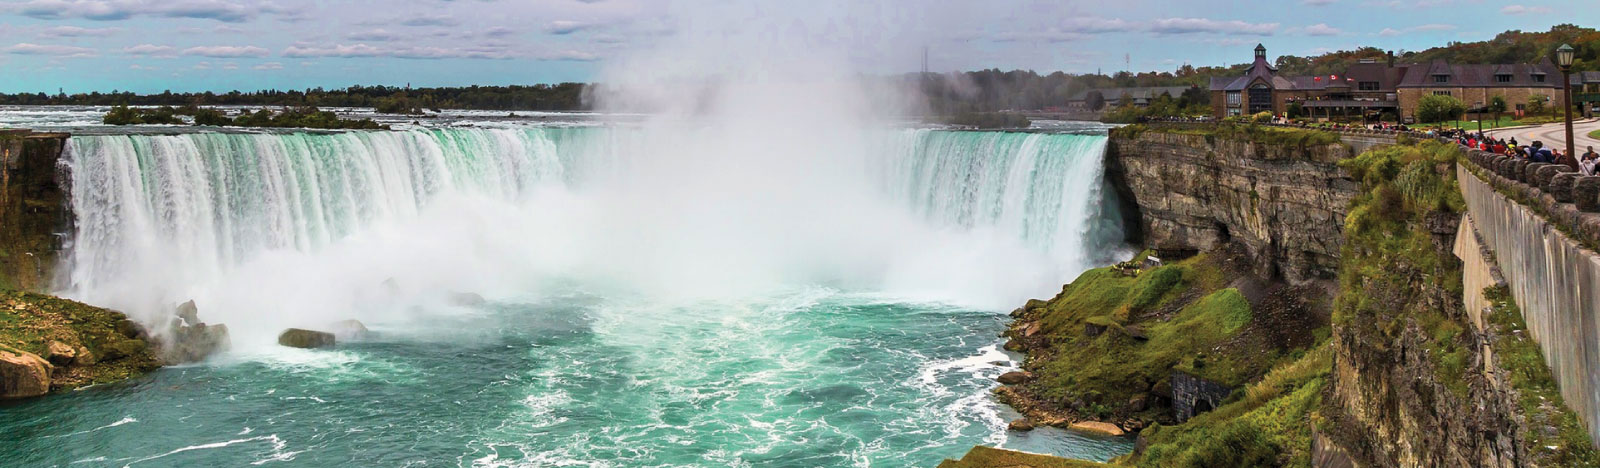 Upcoming Events New Year’s Eve Niagara Falls